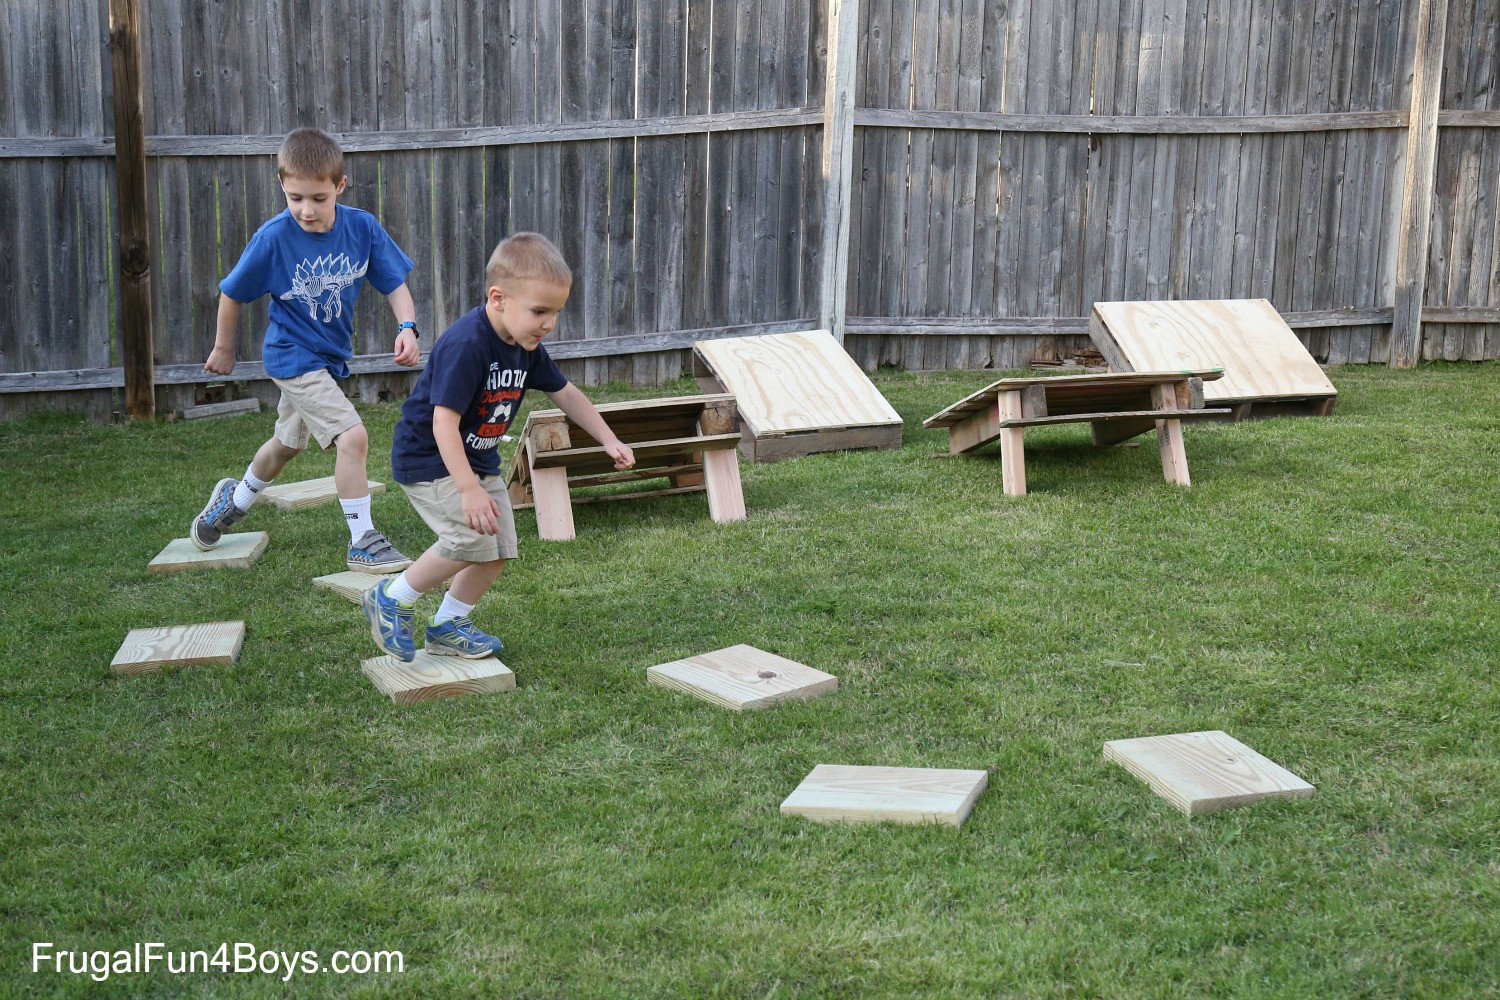 Ninja Warrior Backyard Course
 DIY American Ninja Warrior Backyard Obstacle Course